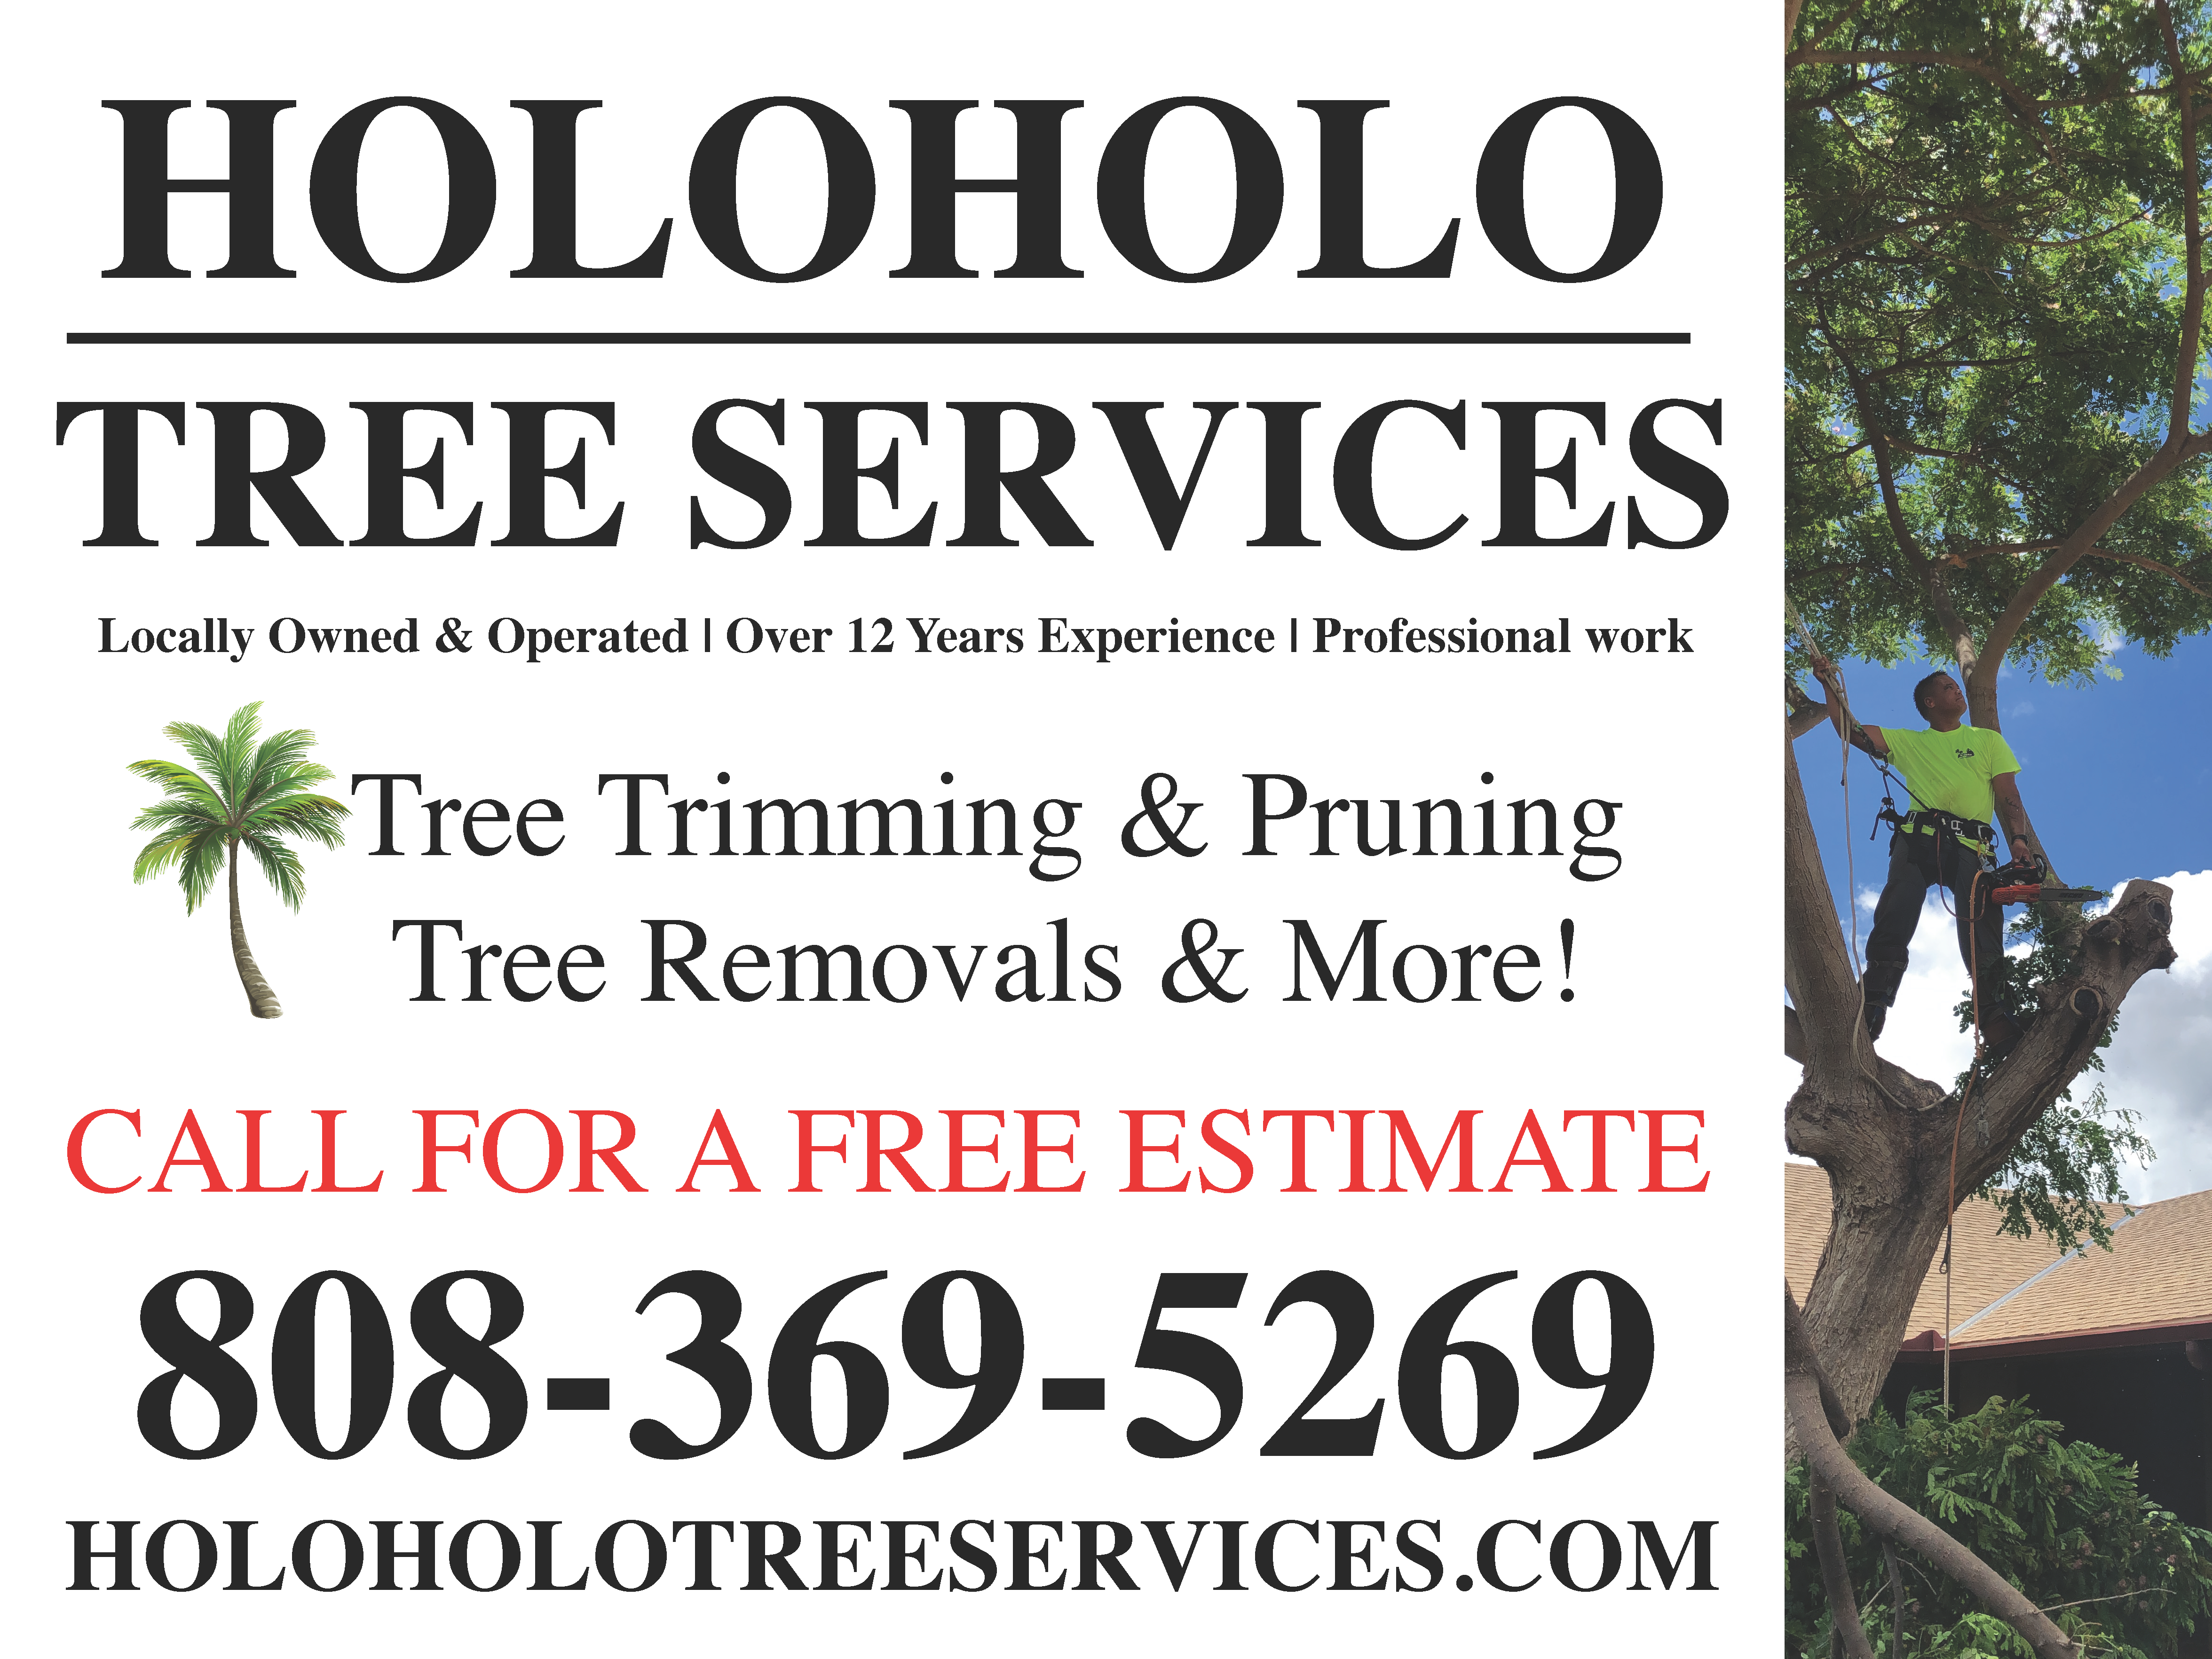 Holoholo Tree Services